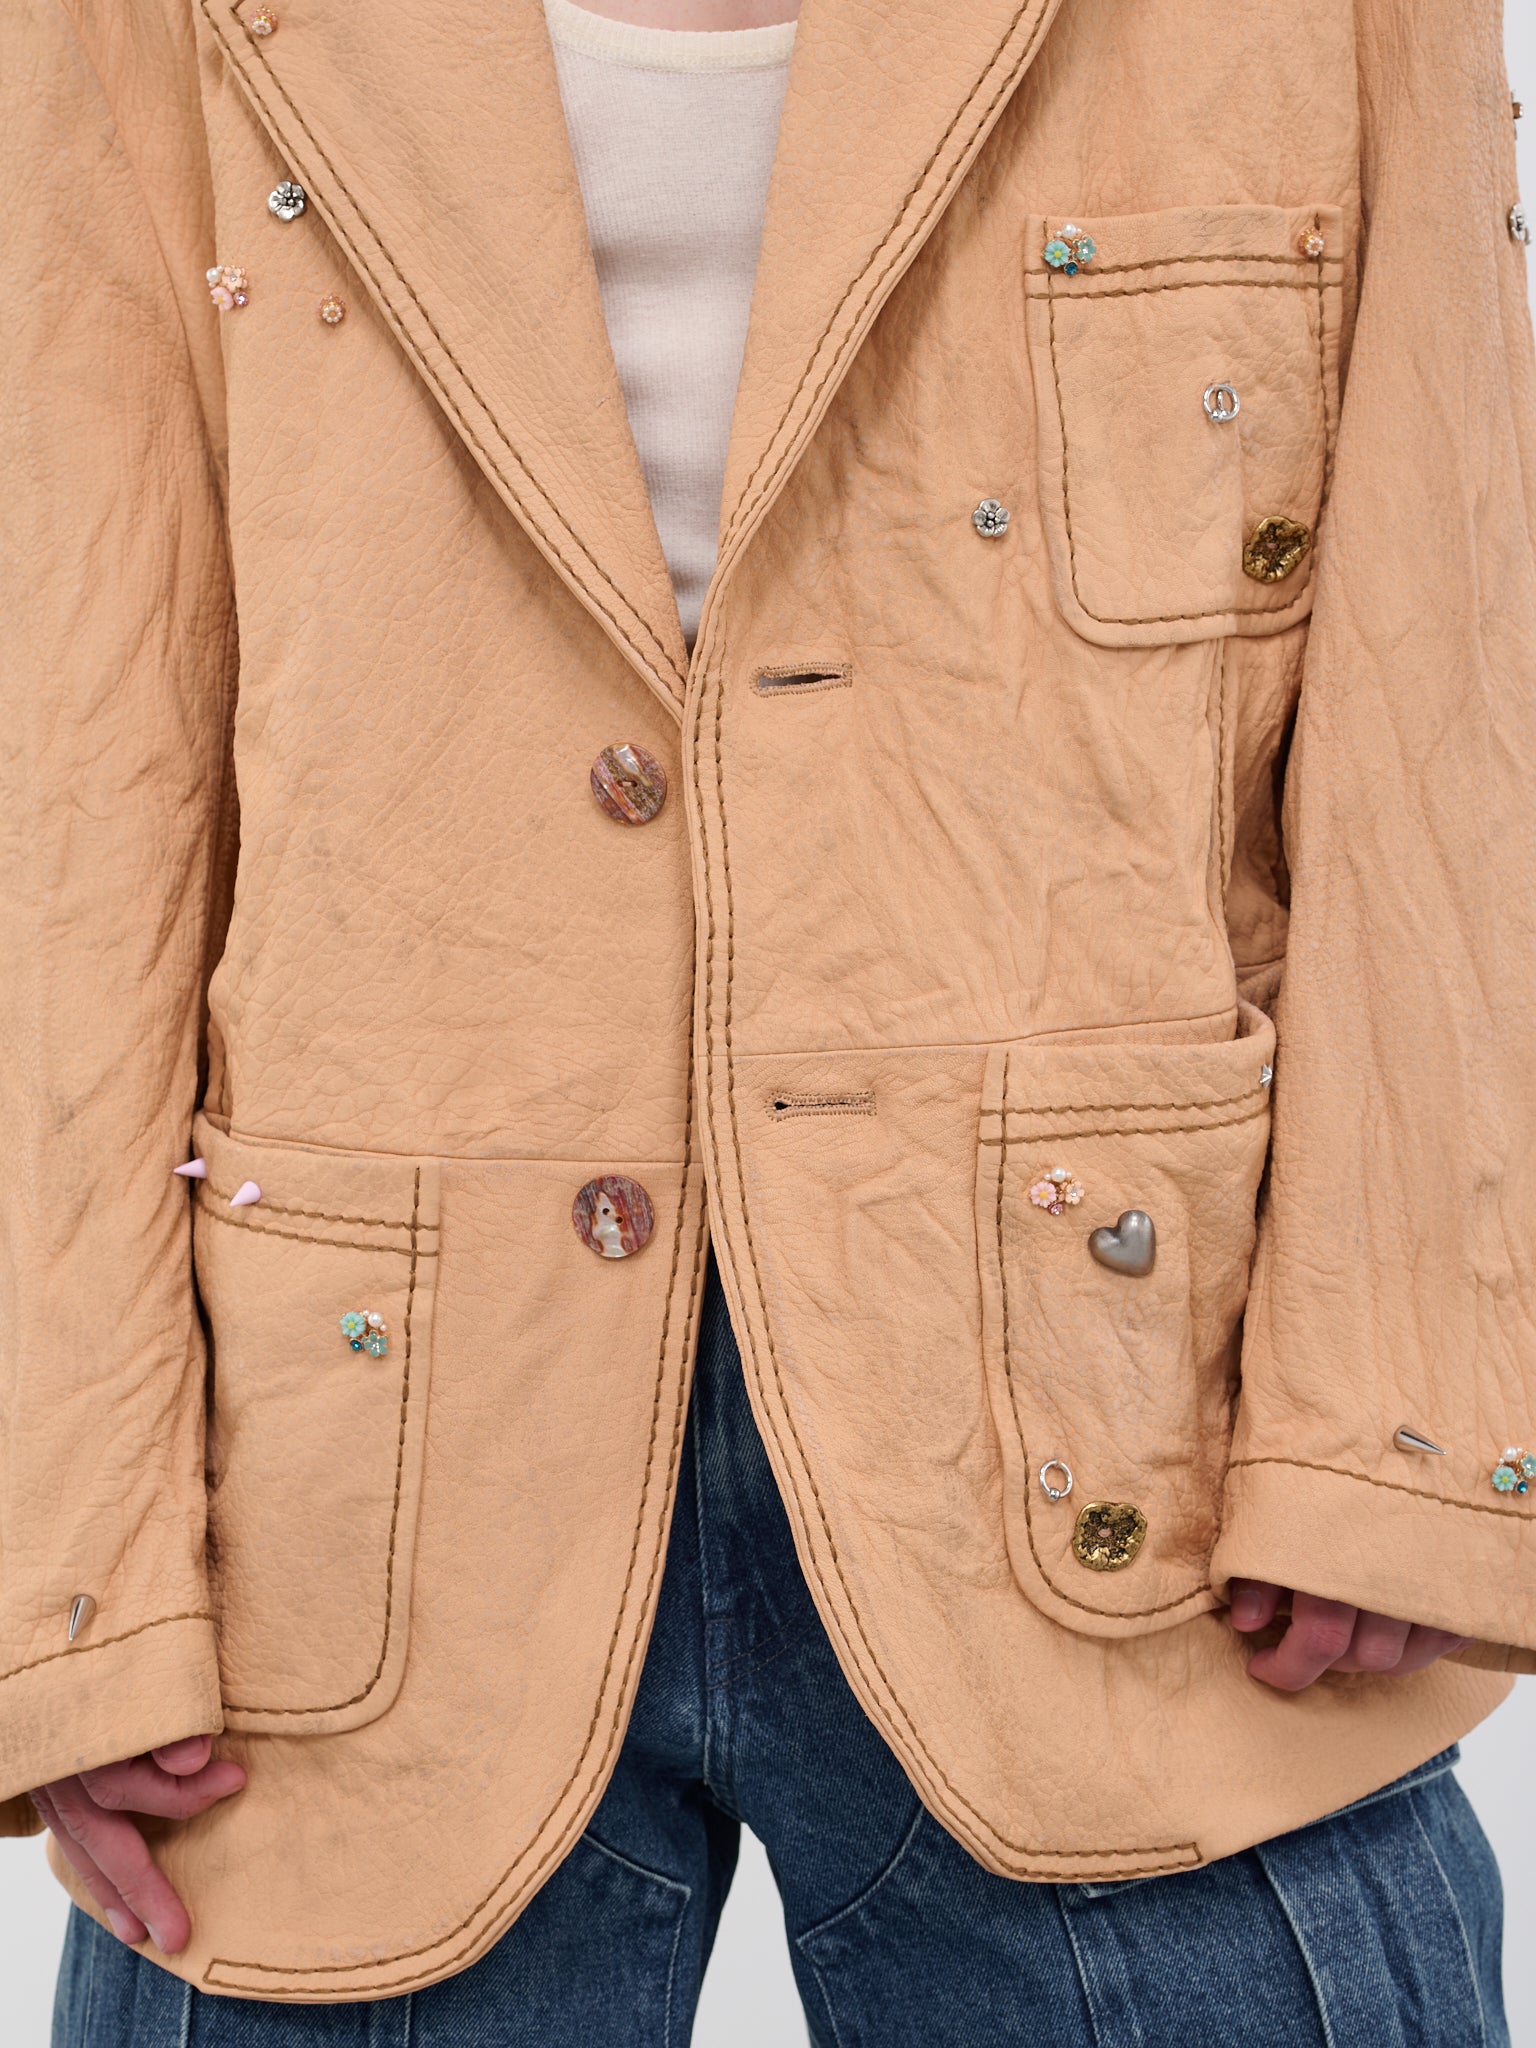 Vintage Triple H Denim Jacket With Patches